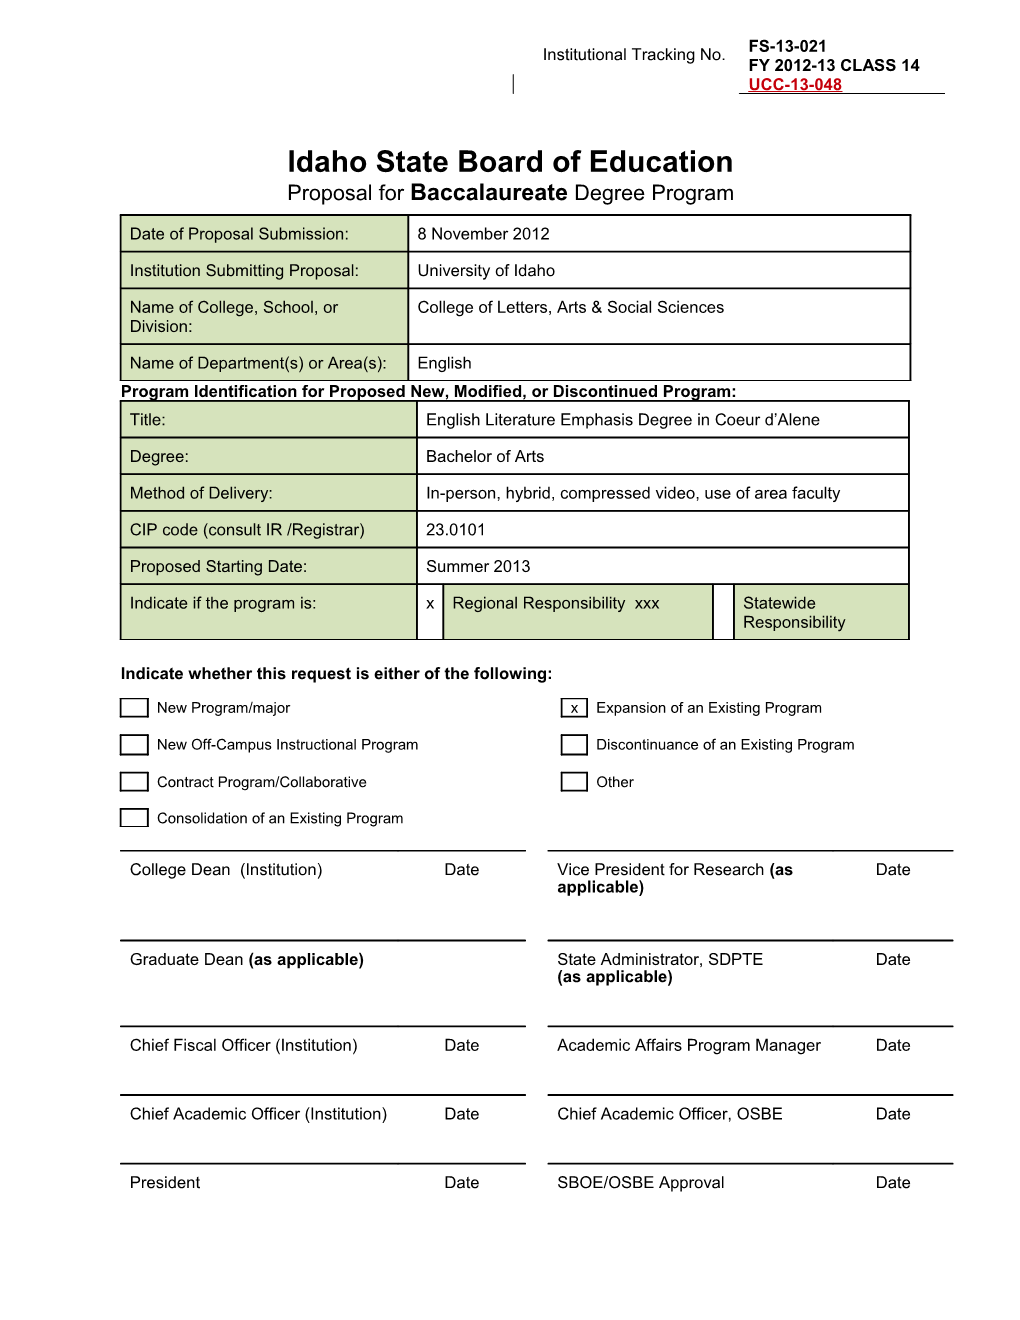 Idaho State Board of Education s1